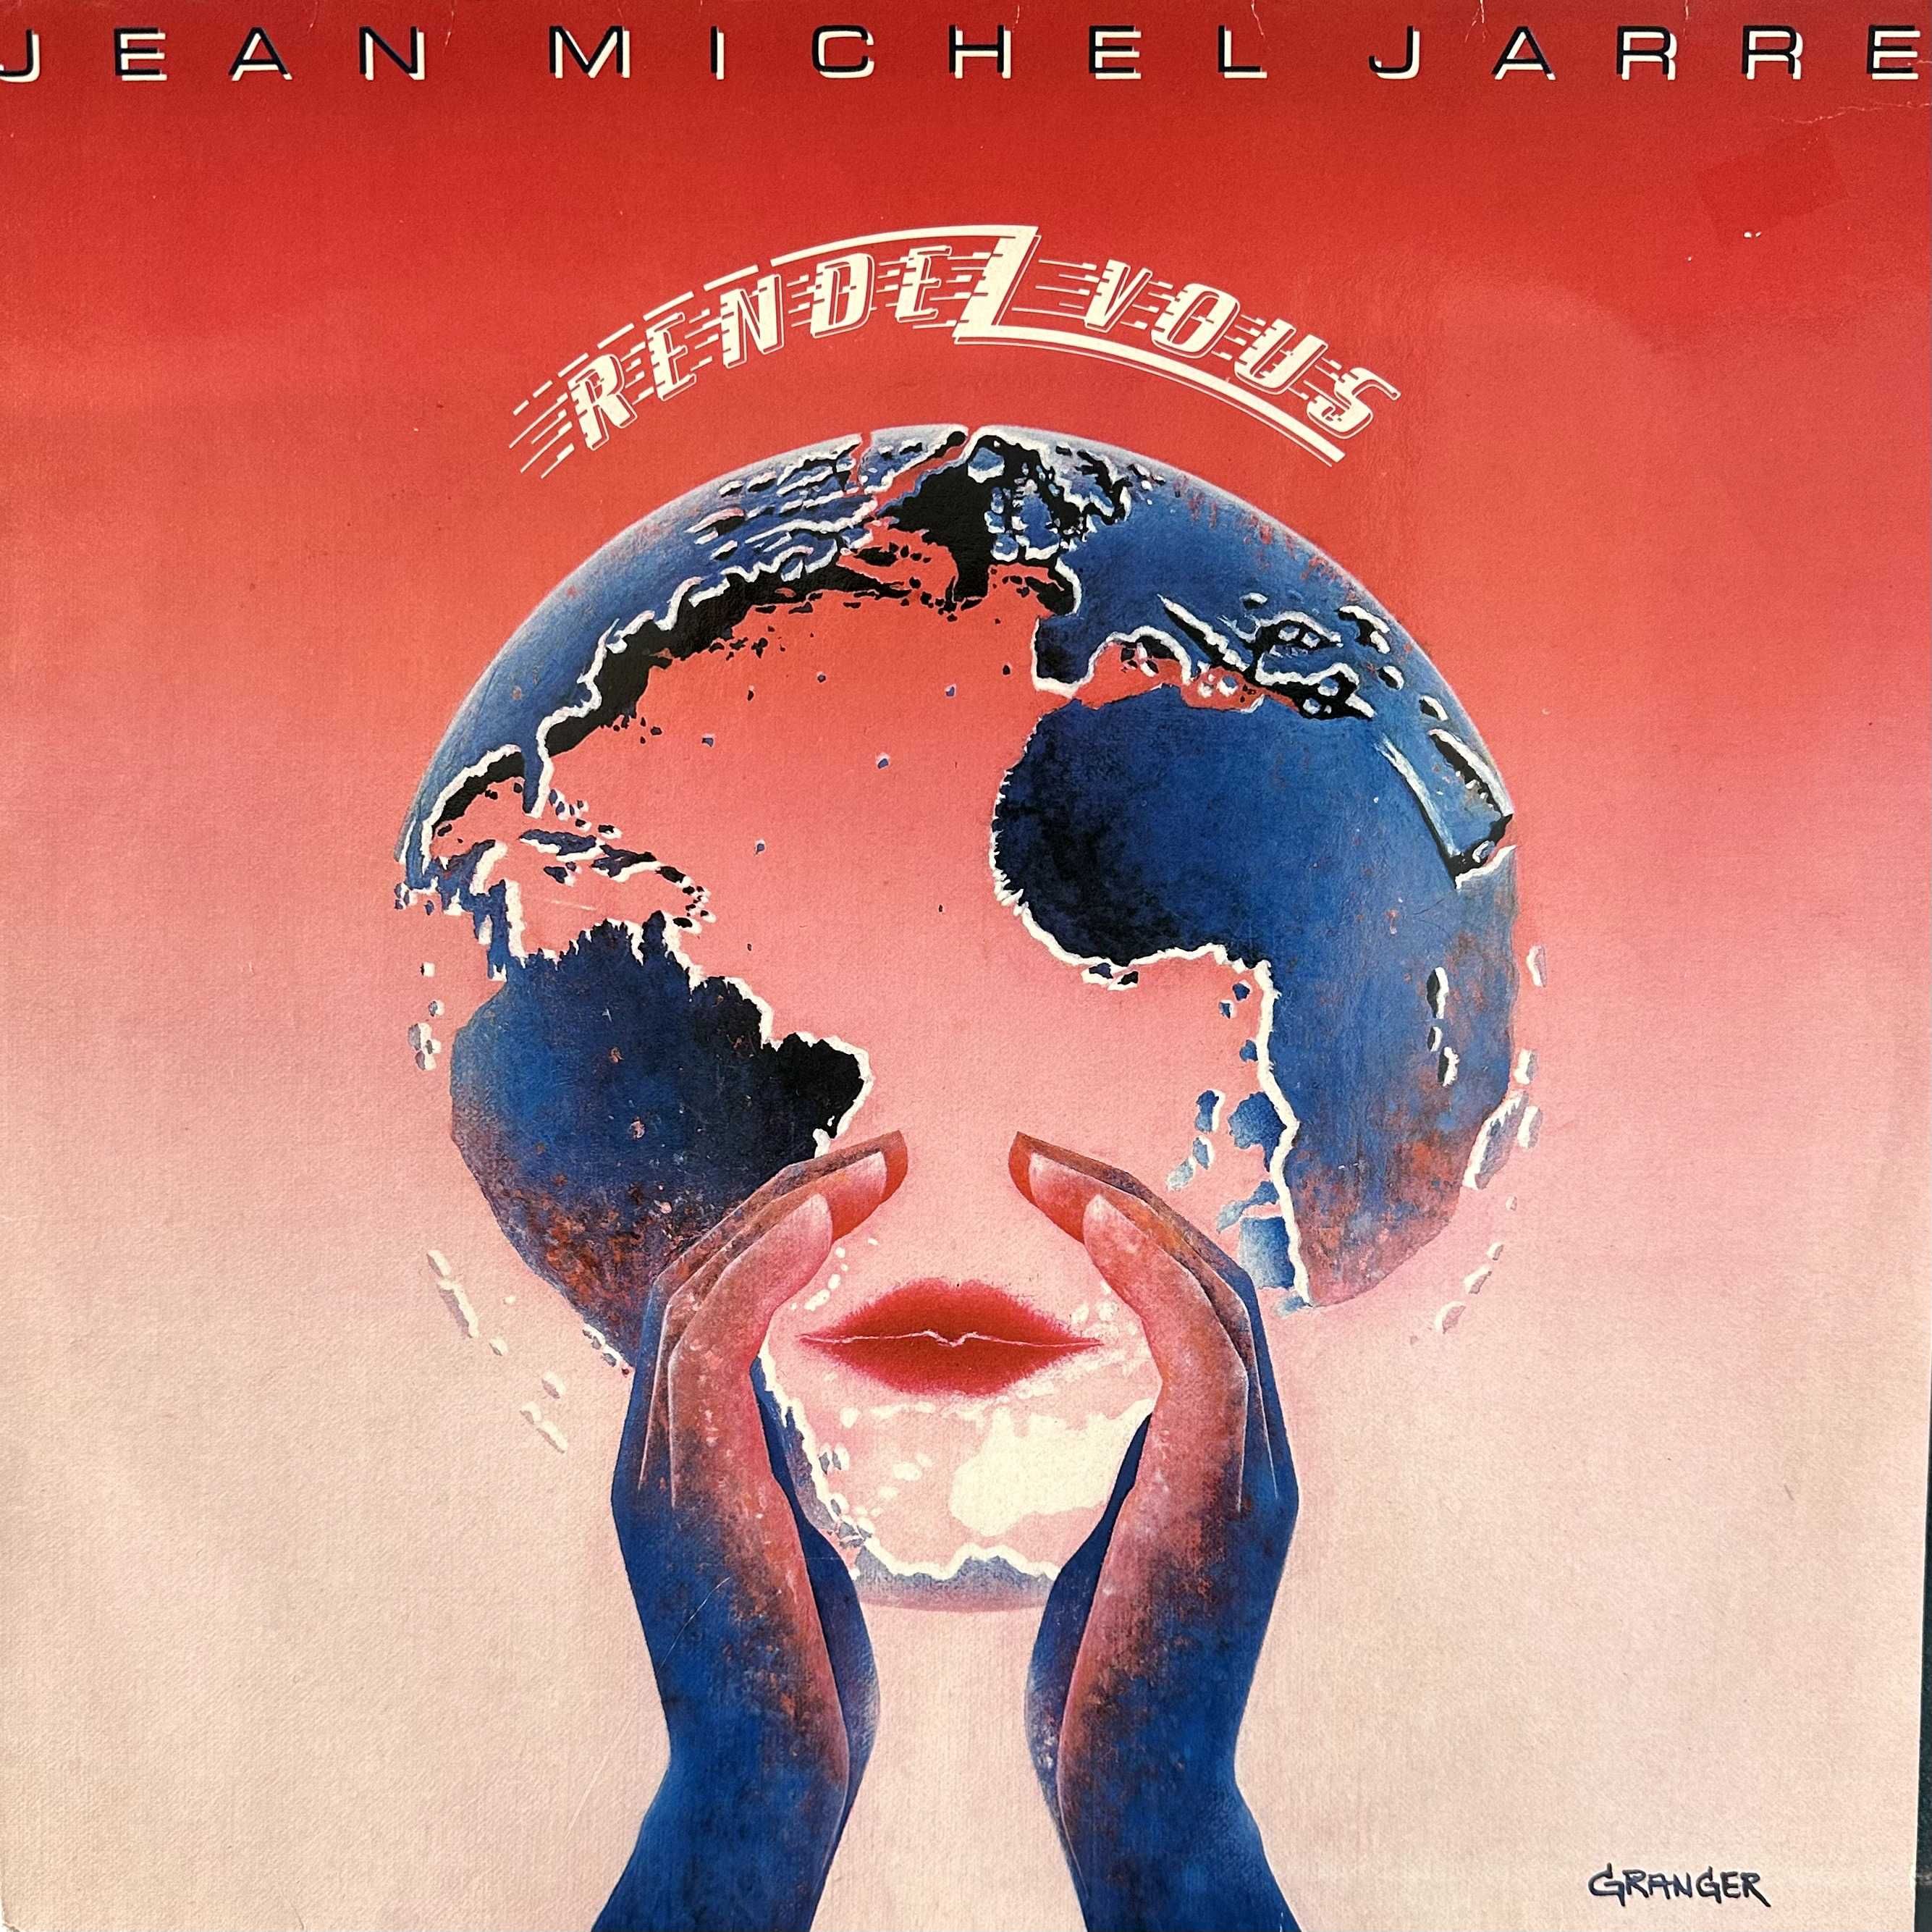 Jean Michel Jarre - Rande Vouse (Vinyl, 1986, Germany)